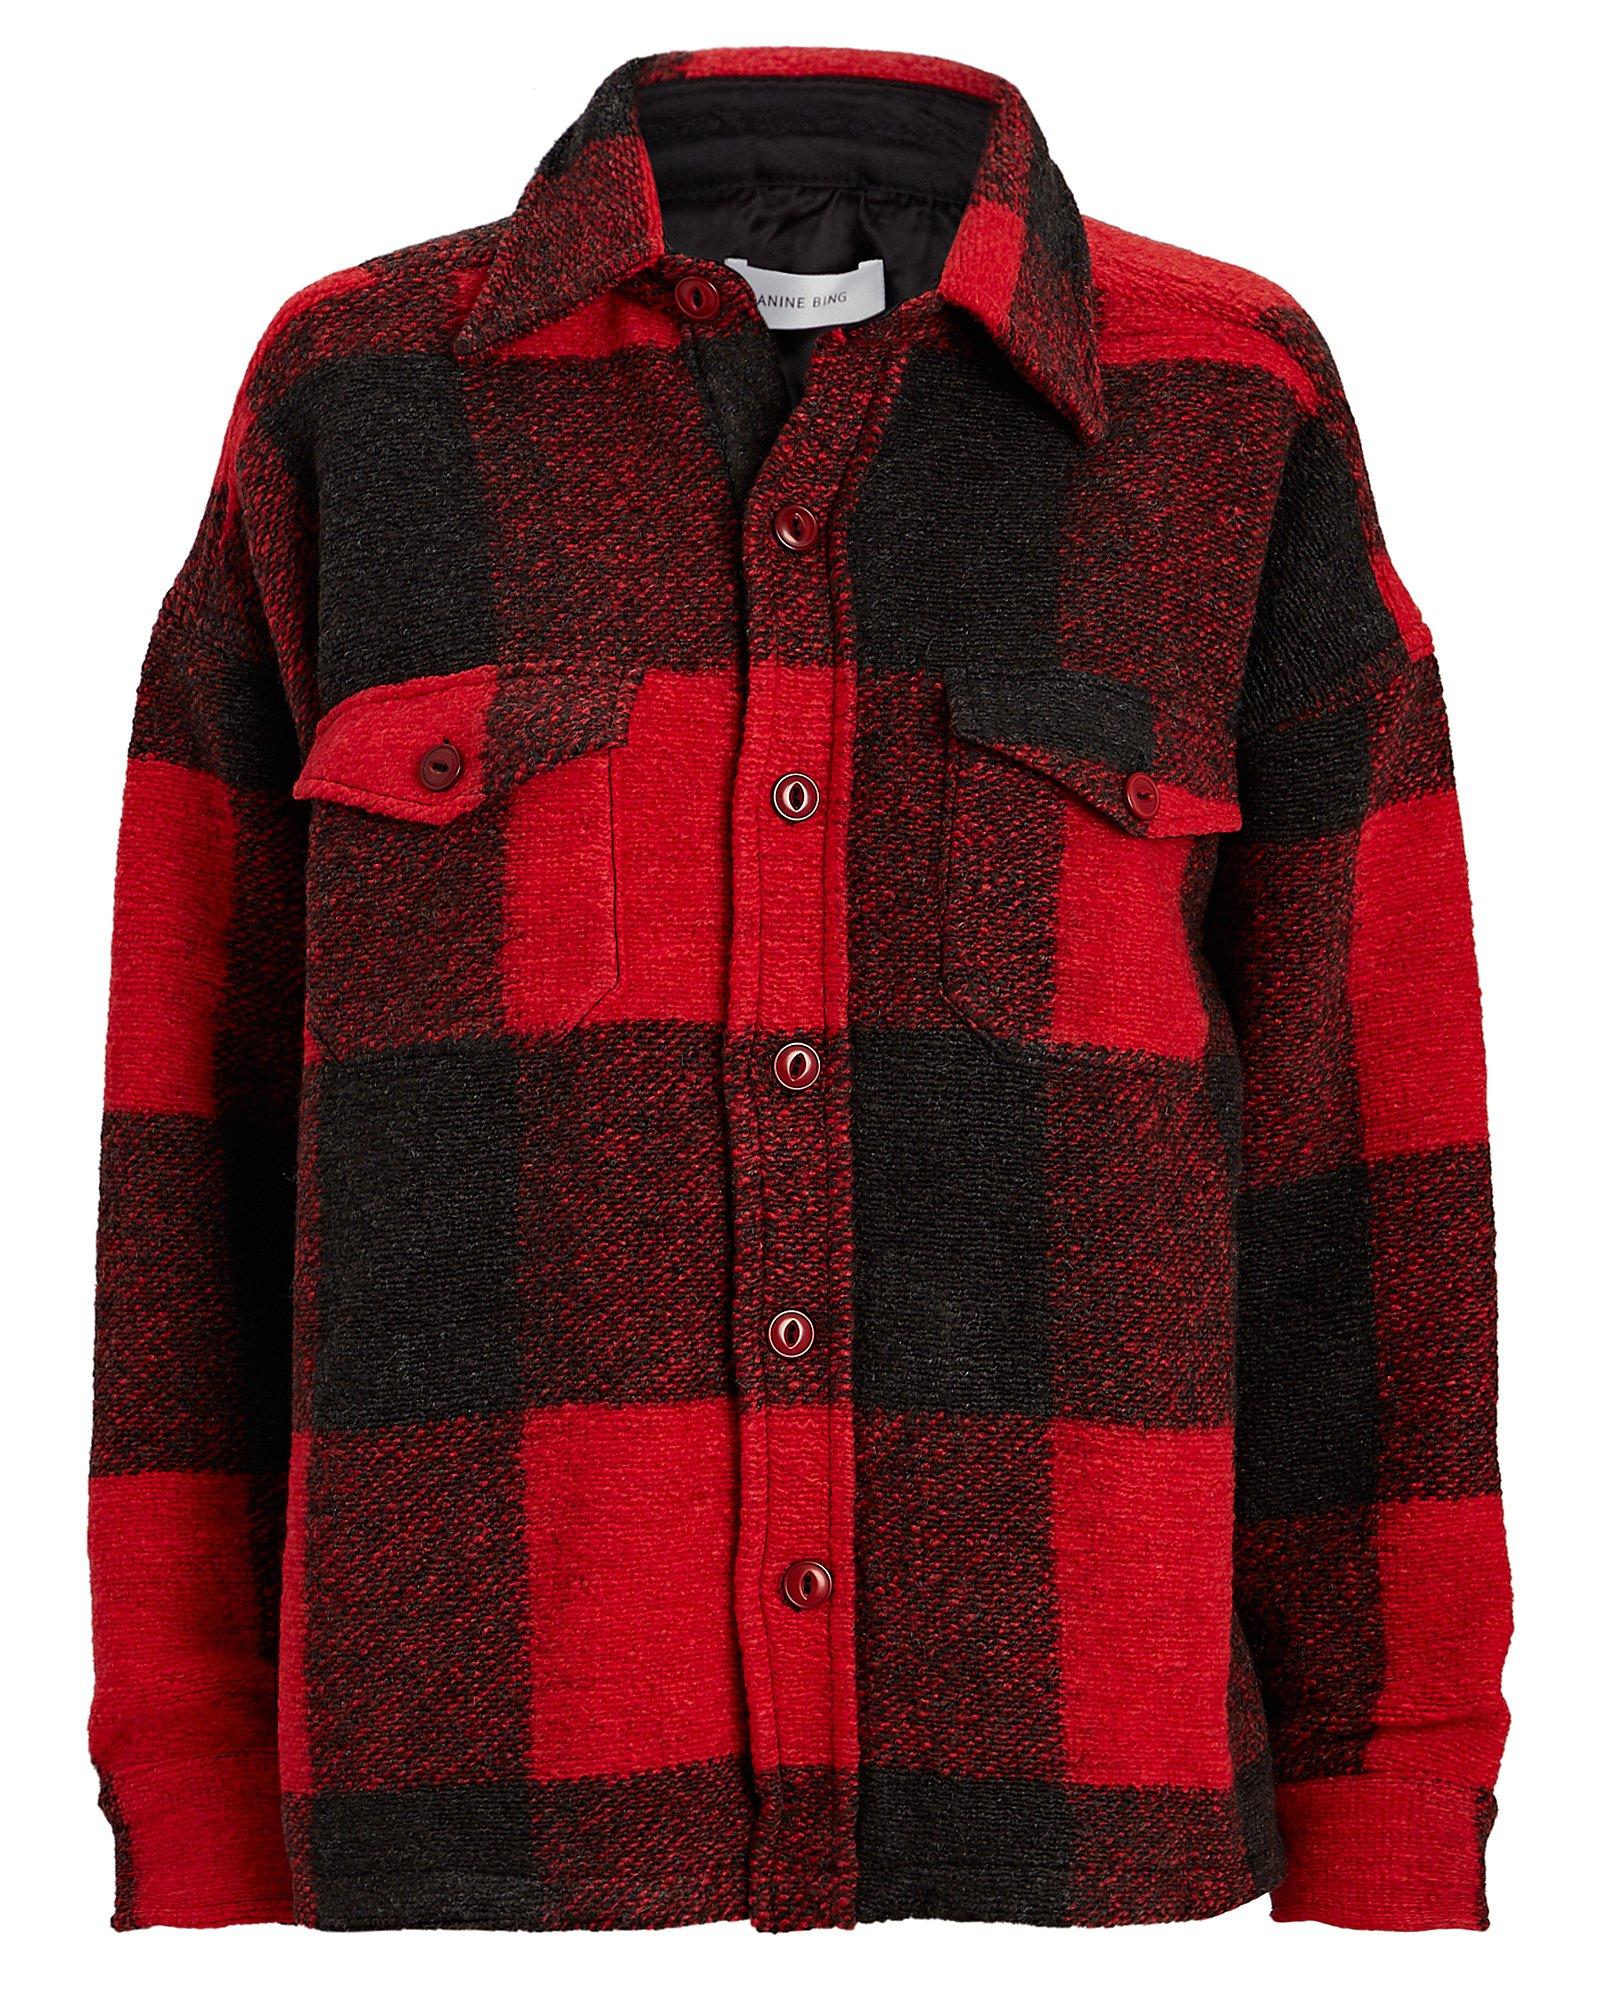 Anine Bing Bobbi Buffalo Check Flannel Jacket in Red - Lyst